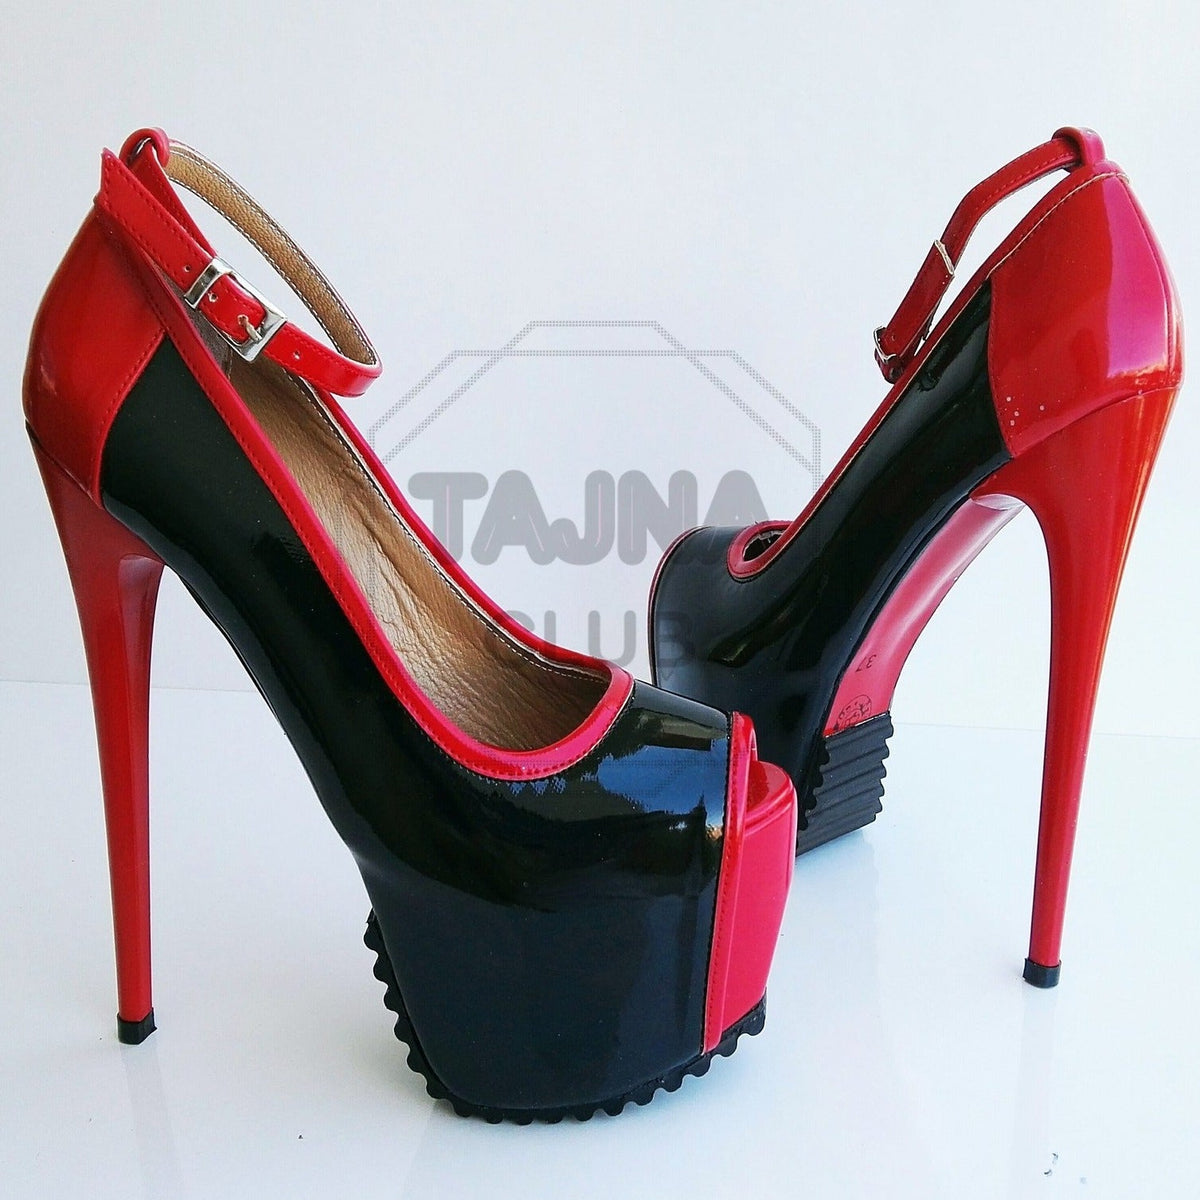 Red and Black Patent Leather High Heel Platform Pumps | Tajna Club